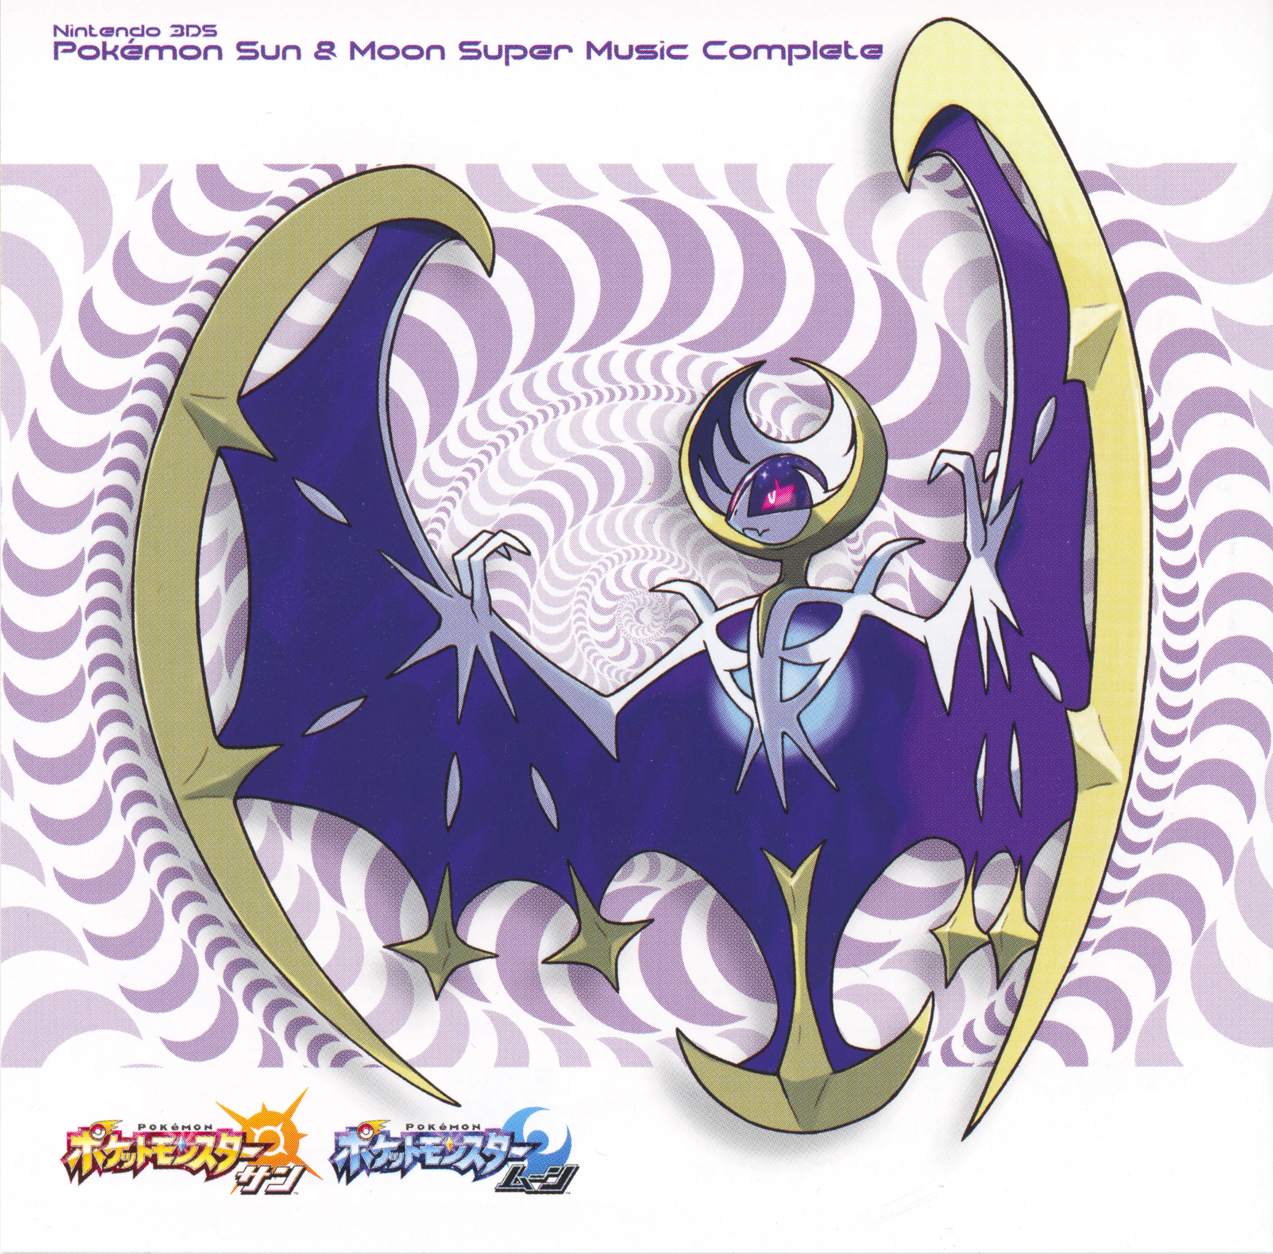 Pokémon X & Pokémon Y: Super Music Collection (2013) MP3 - Download Pokémon  X & Pokémon Y: Super Music Collection (2013) Soundtracks for FREE!